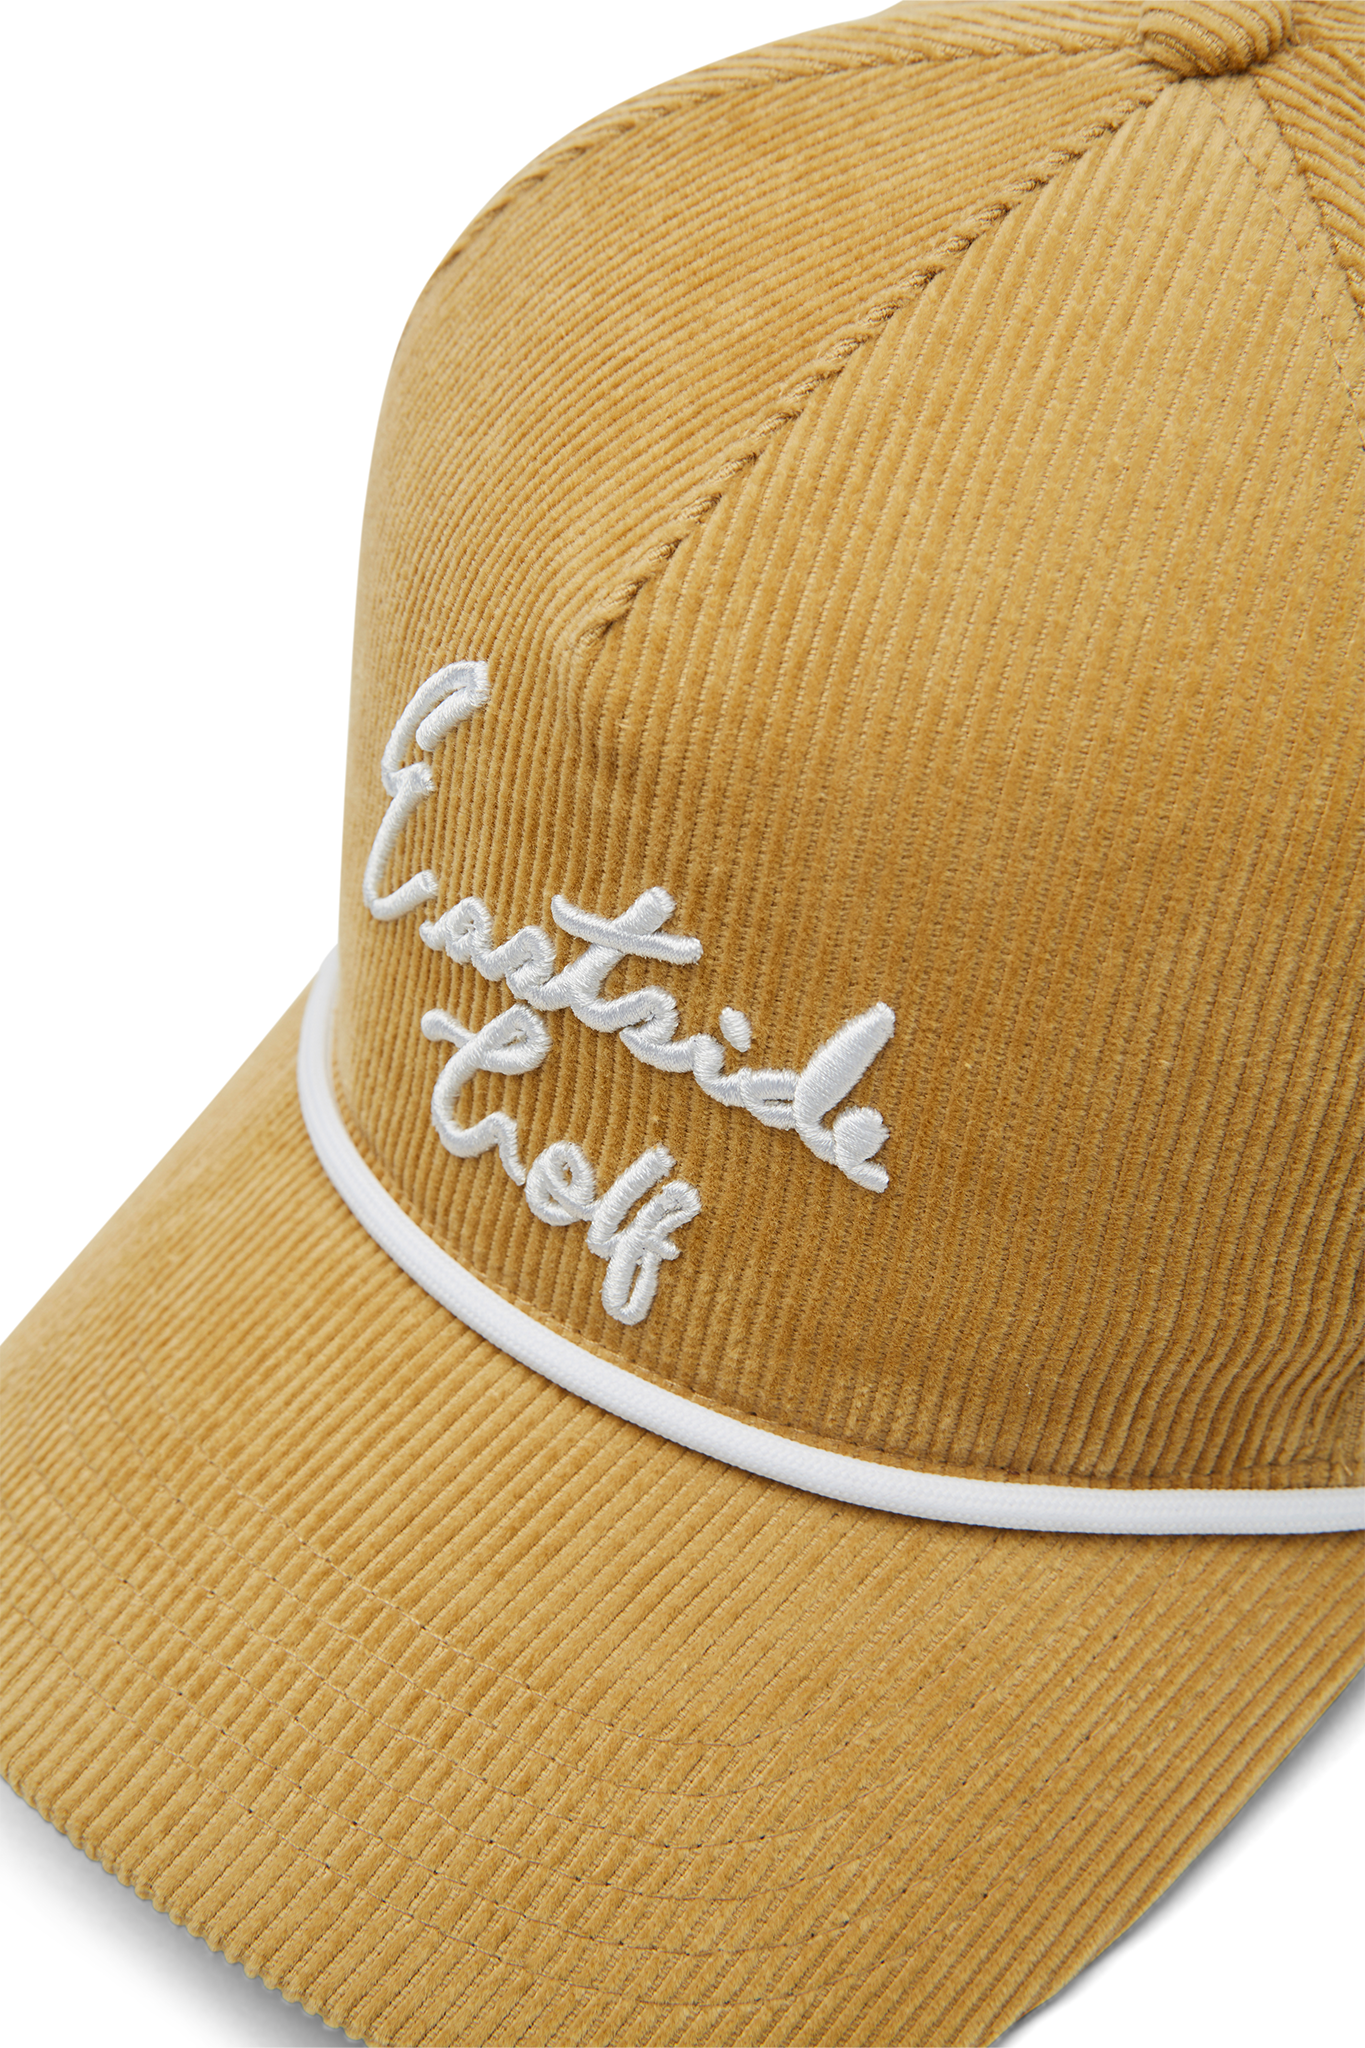 Eastside Golf 5 Panel Hat Khaki